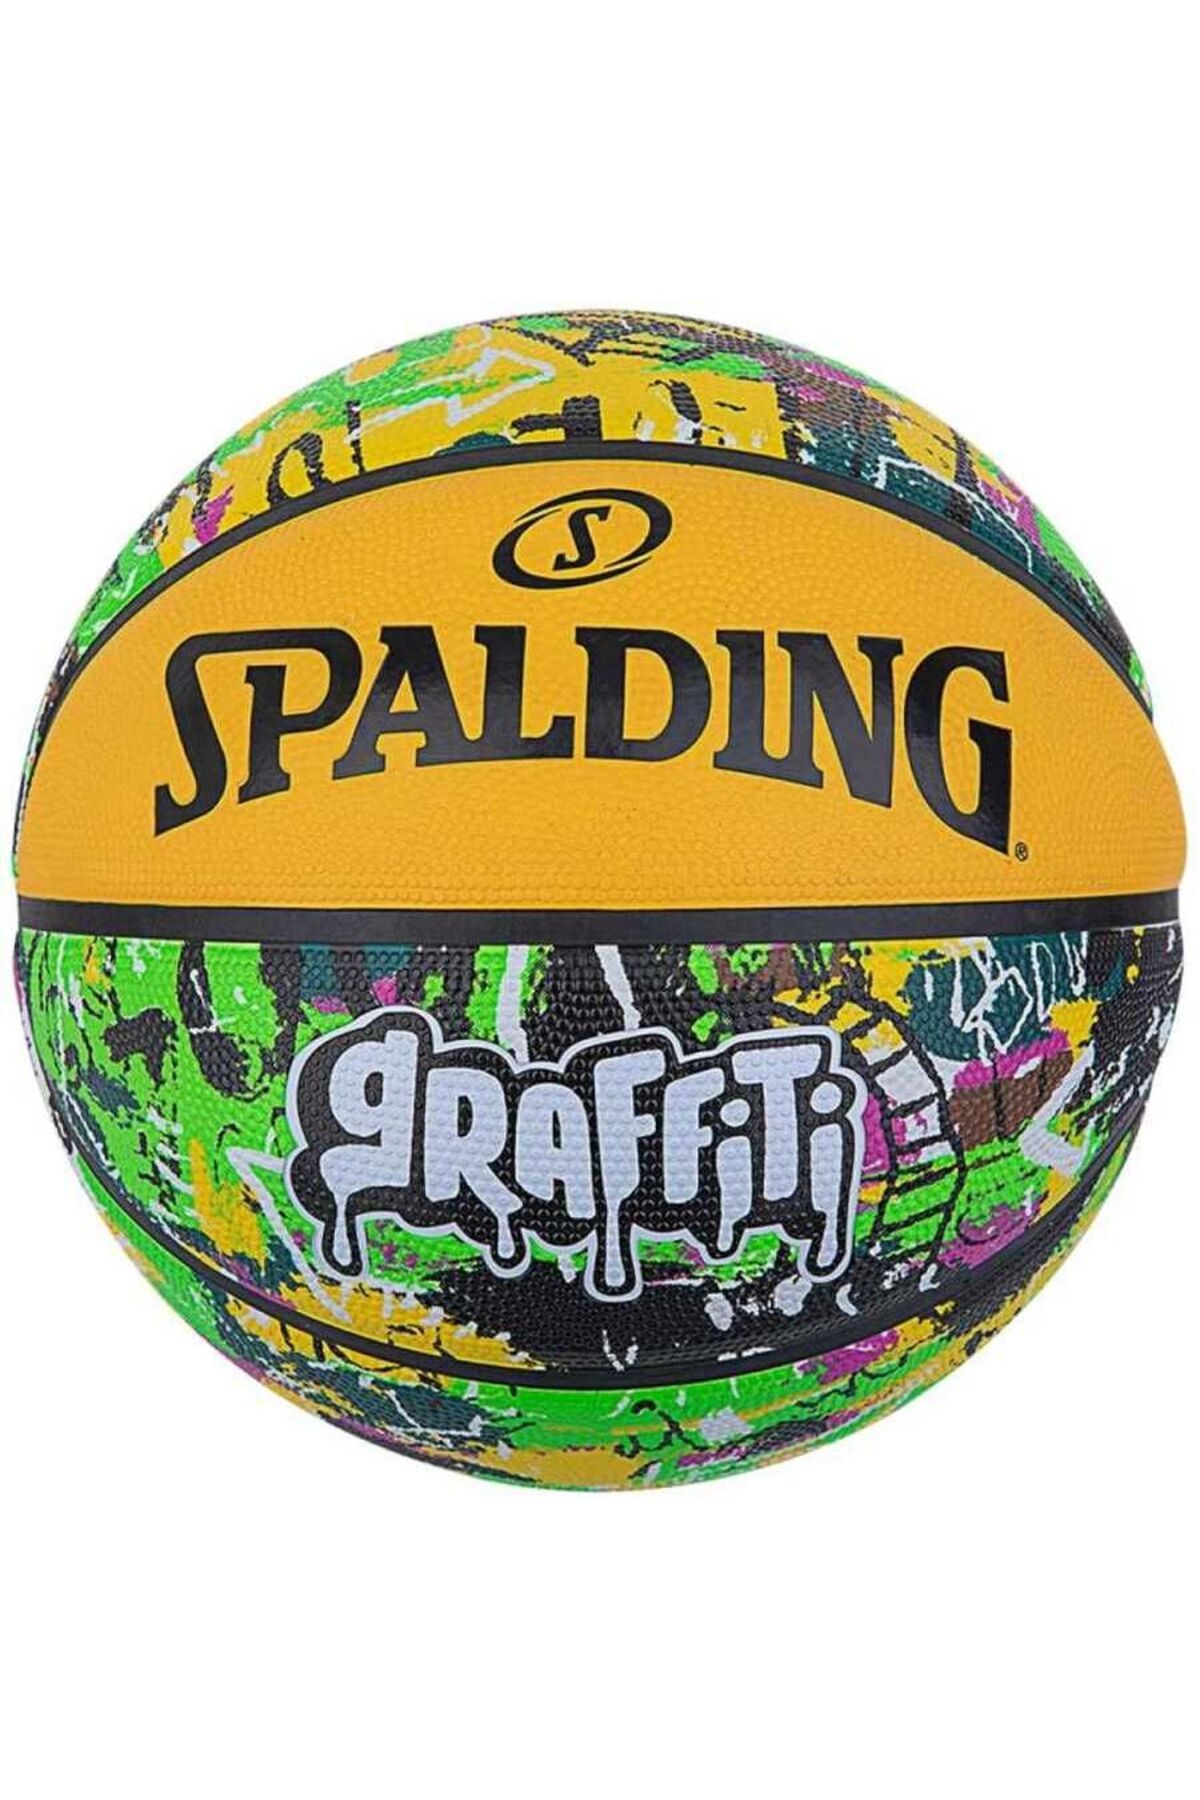 Spalding Green Yellow Graffiti Sz7 2021 Basket Topu 84374z